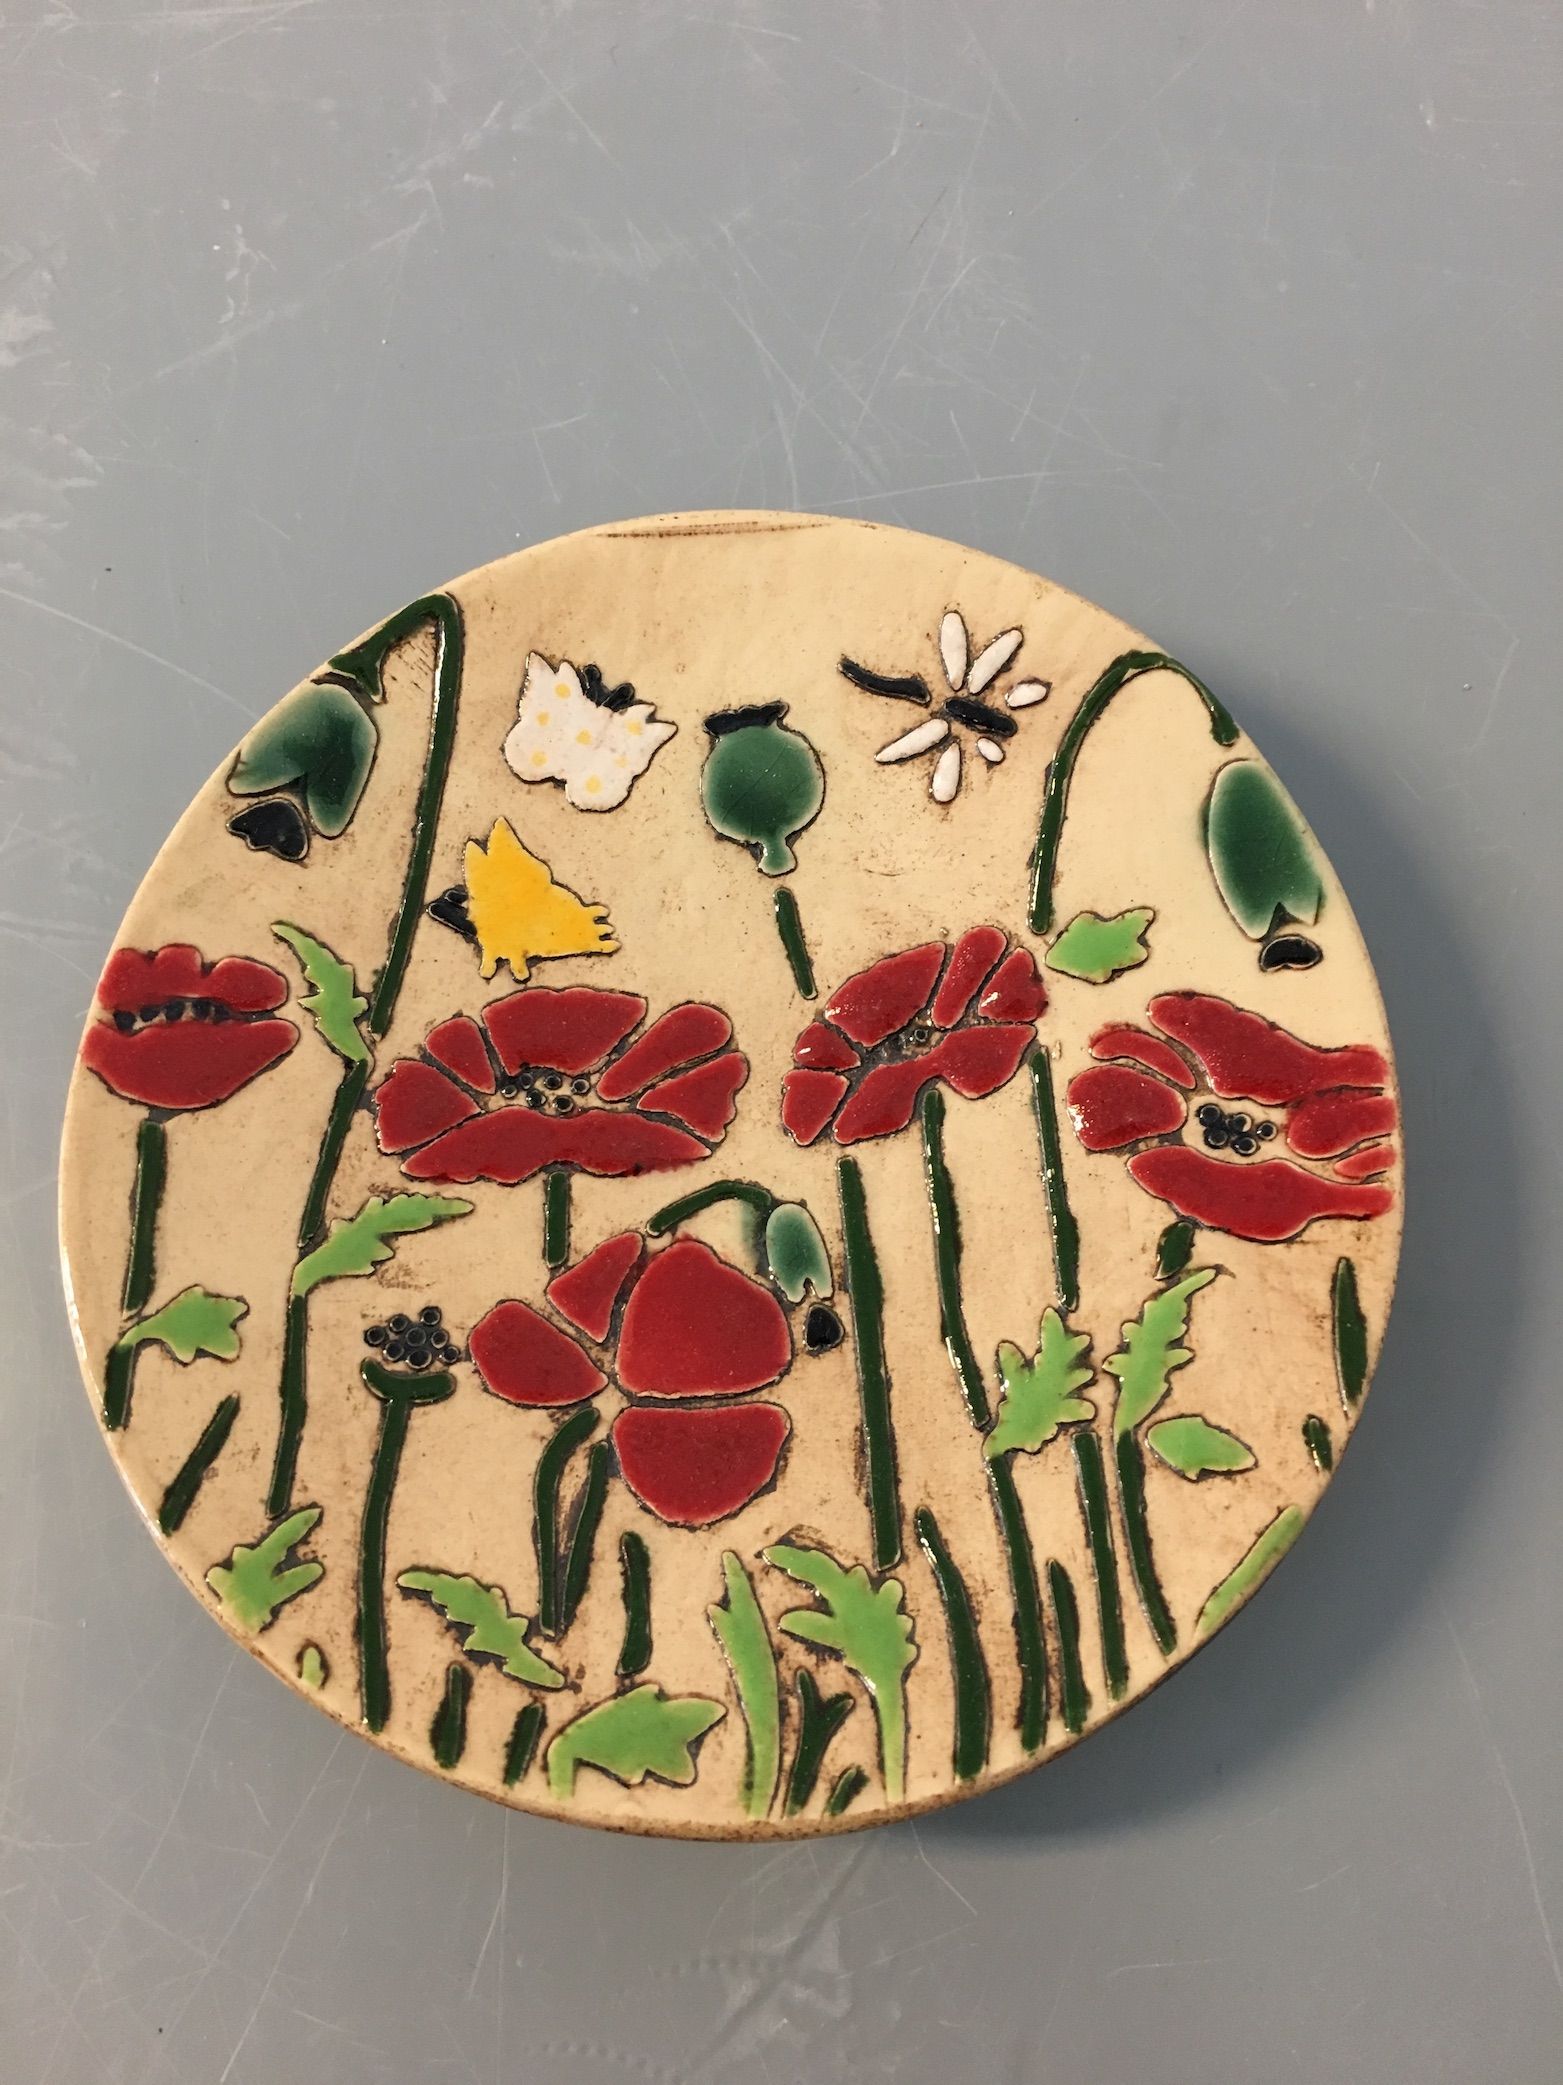 Simone Winkler-Thies Keramik aus Pankow zeigt einen frühlinghaften Blütenteller